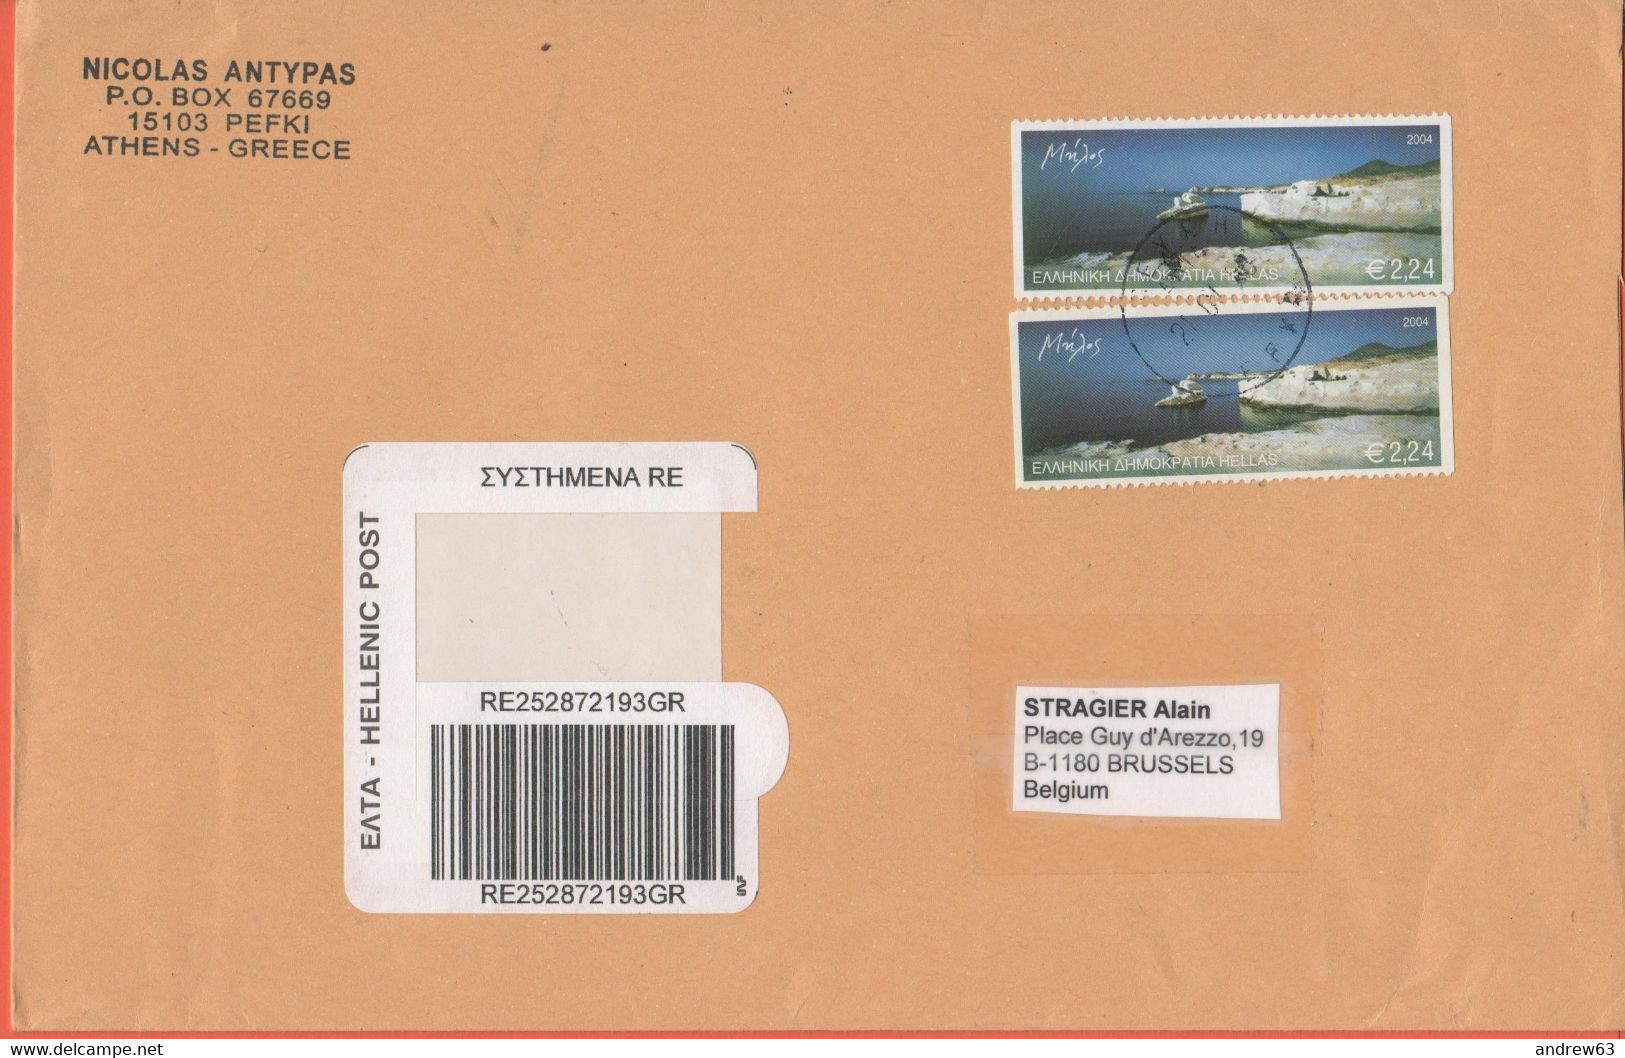 GRECIA - GREECE - GRECE - GRIECHENLAND - 2008 - 2 X Melos 2004 - Registered - Medium Envelope - Viaggiata Da Pefki Per B - Covers & Documents